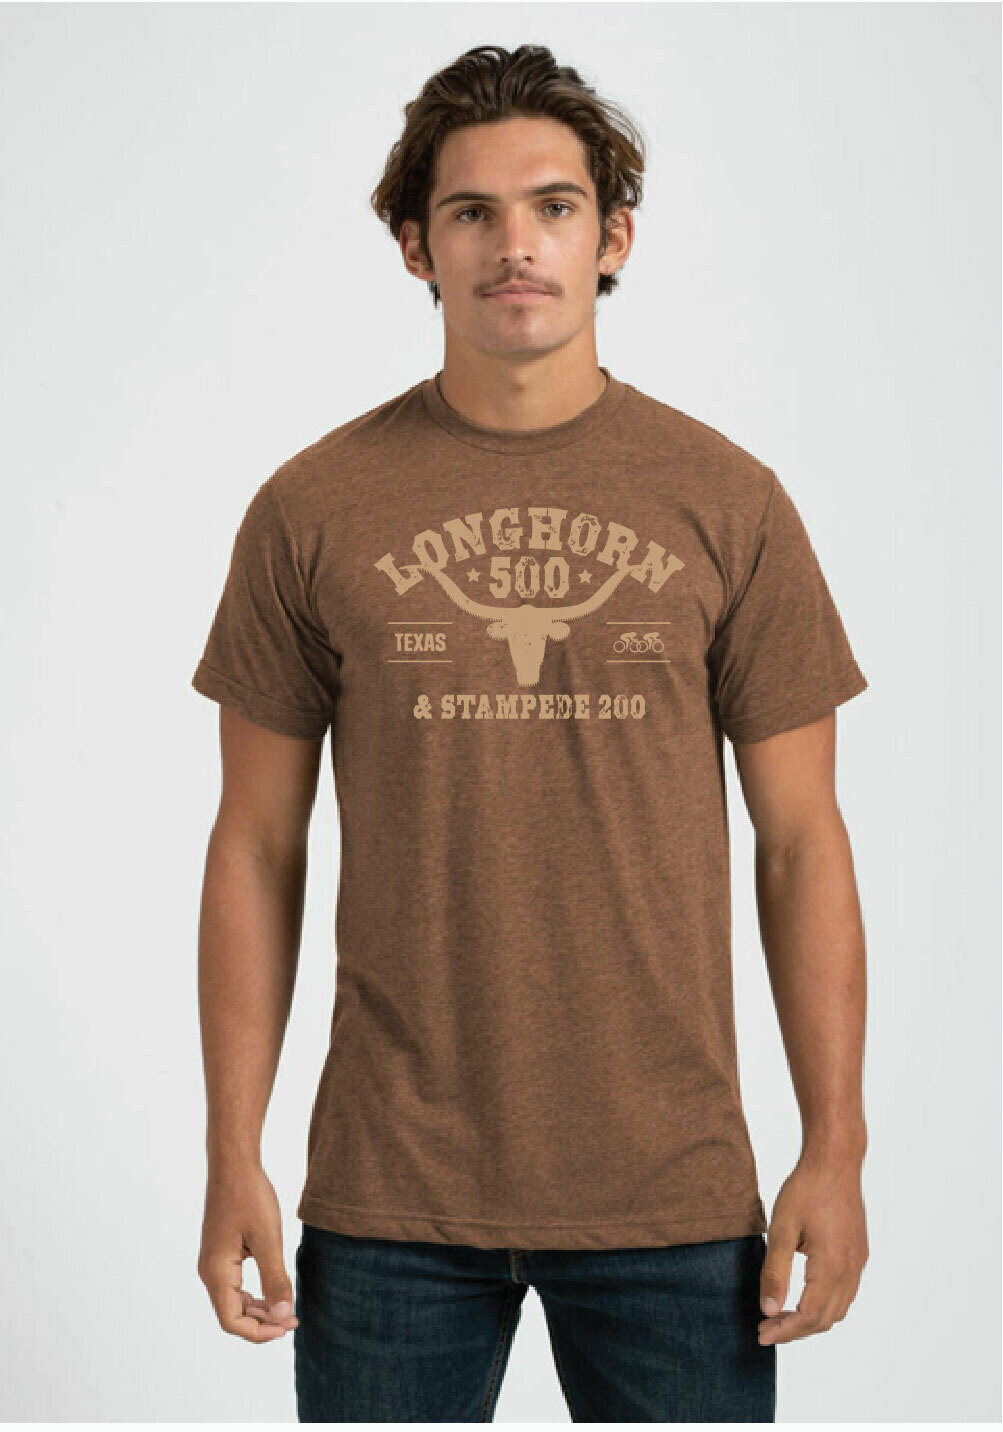 Longhorn 500 / Stampede 200 Logo T-Shirt (Pre-Order for pick up at event check-in)